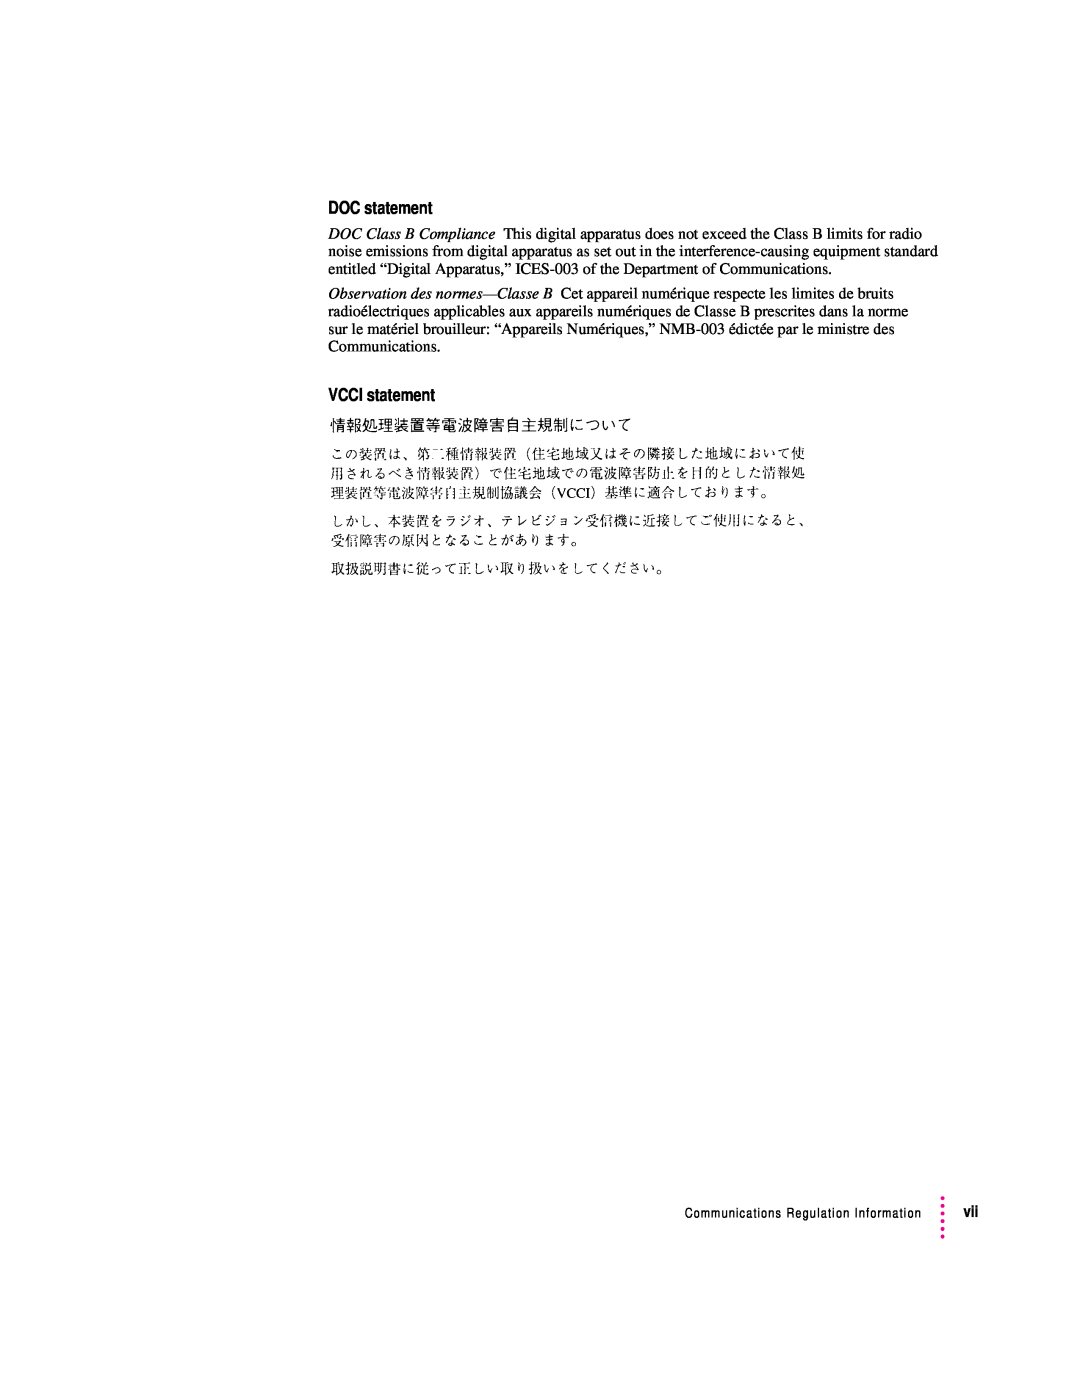 Apple 2400 manual DOC statement, VCCI statement, Communications Regulation Information 